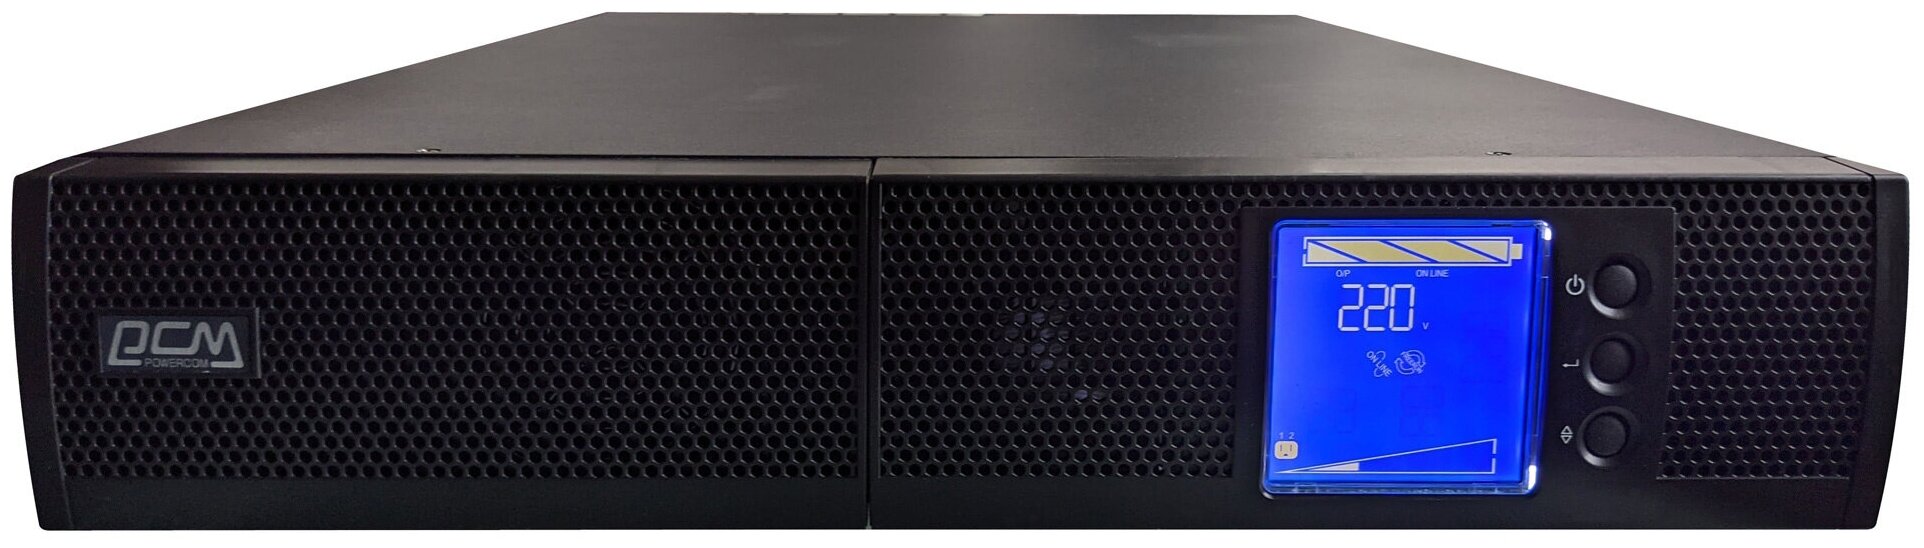 ИБП Powercom Sentinel SNT-2000, 2000 В·А, 2 кВт, IEC, розеток - 9, USB, черный (SNT-2000-L) (без аккумуляторов)